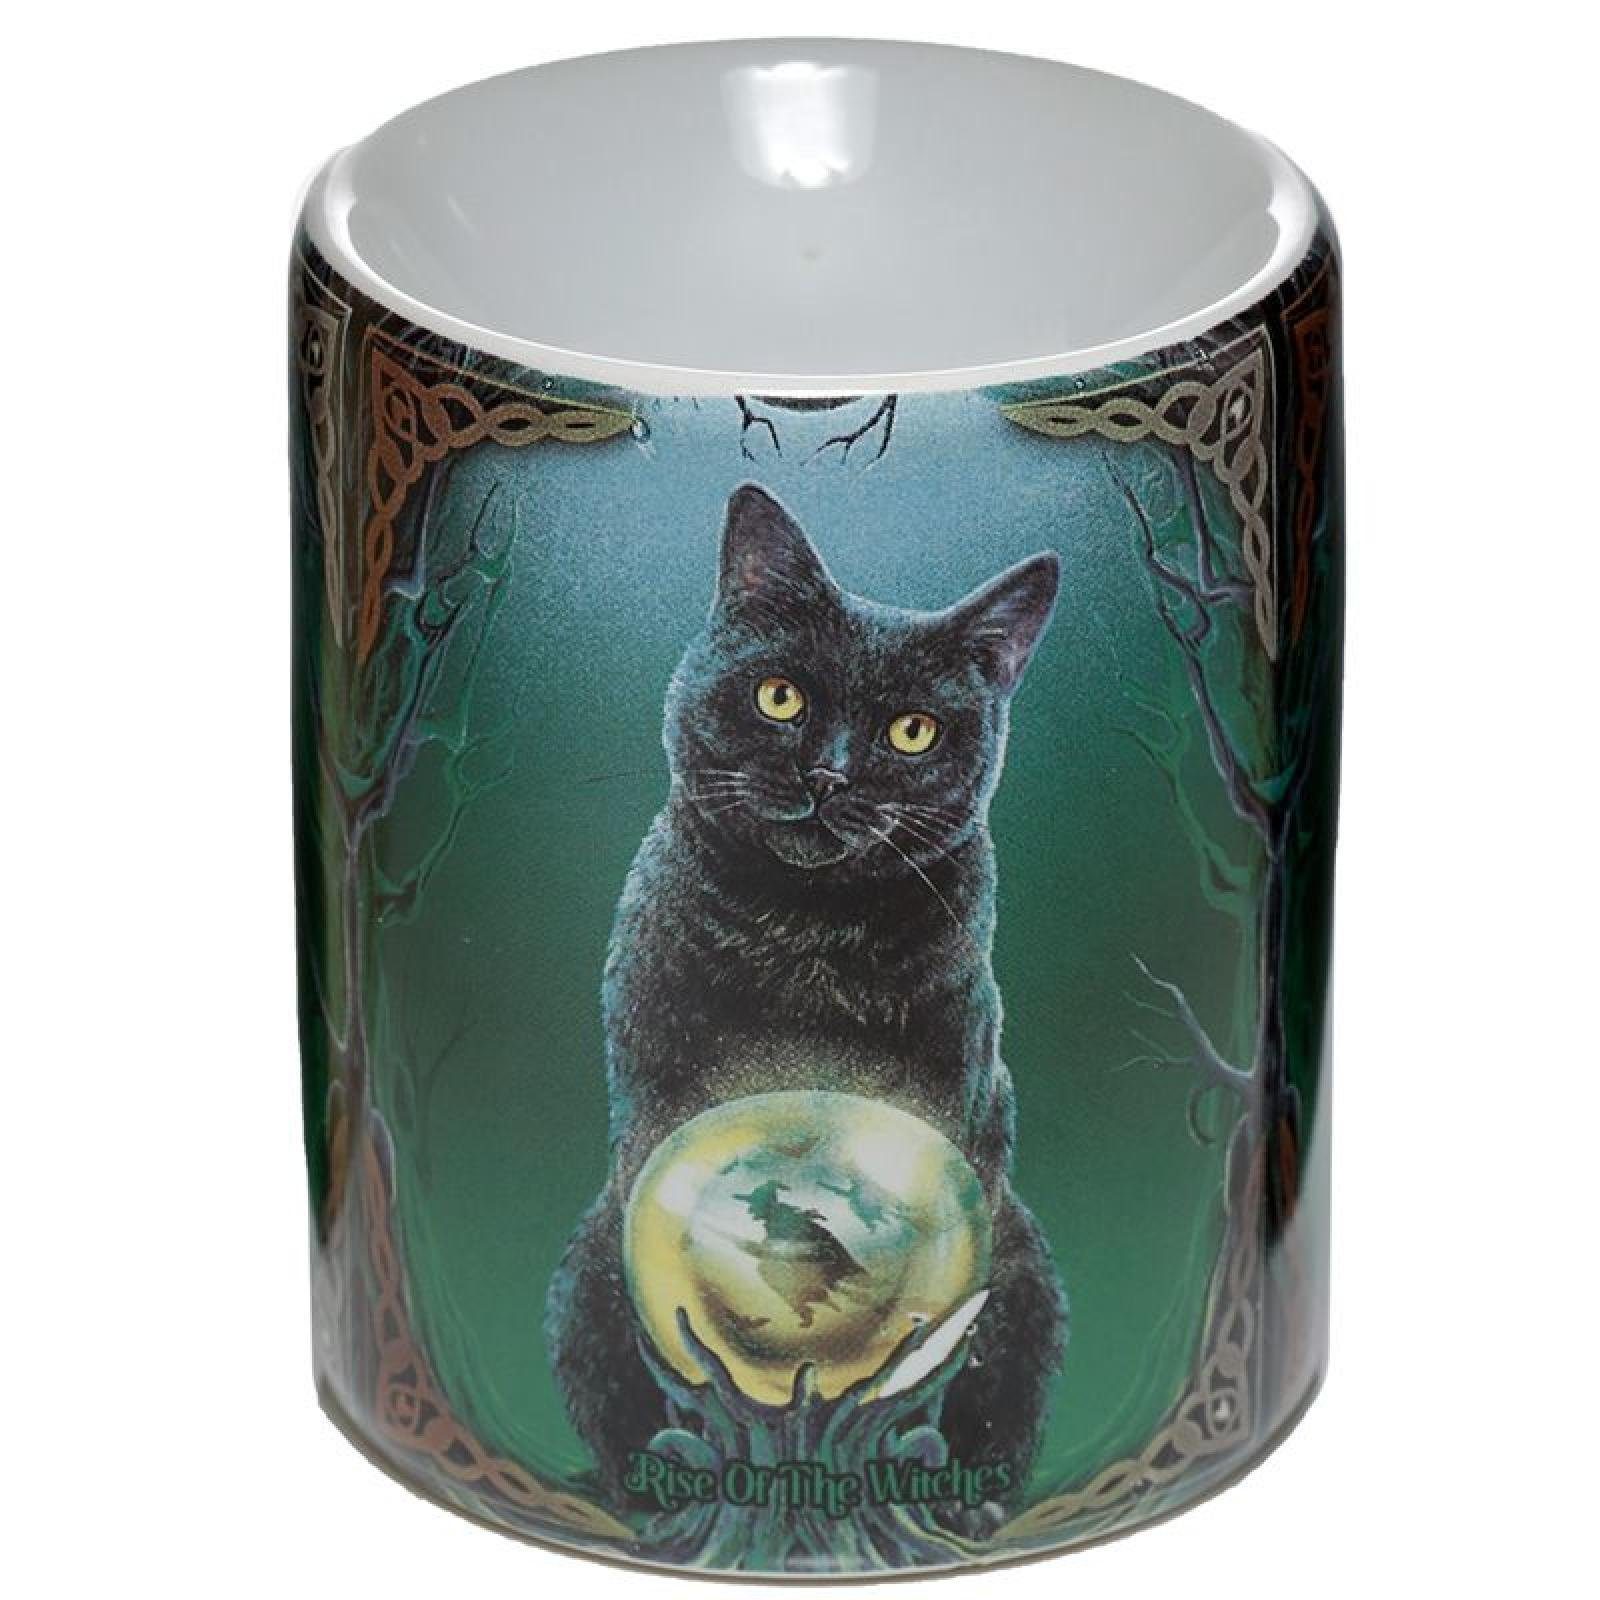 Puckator Duftlampe Duftlampe Aufstieg Hexen Keramik Lisa aus der Parker Katze